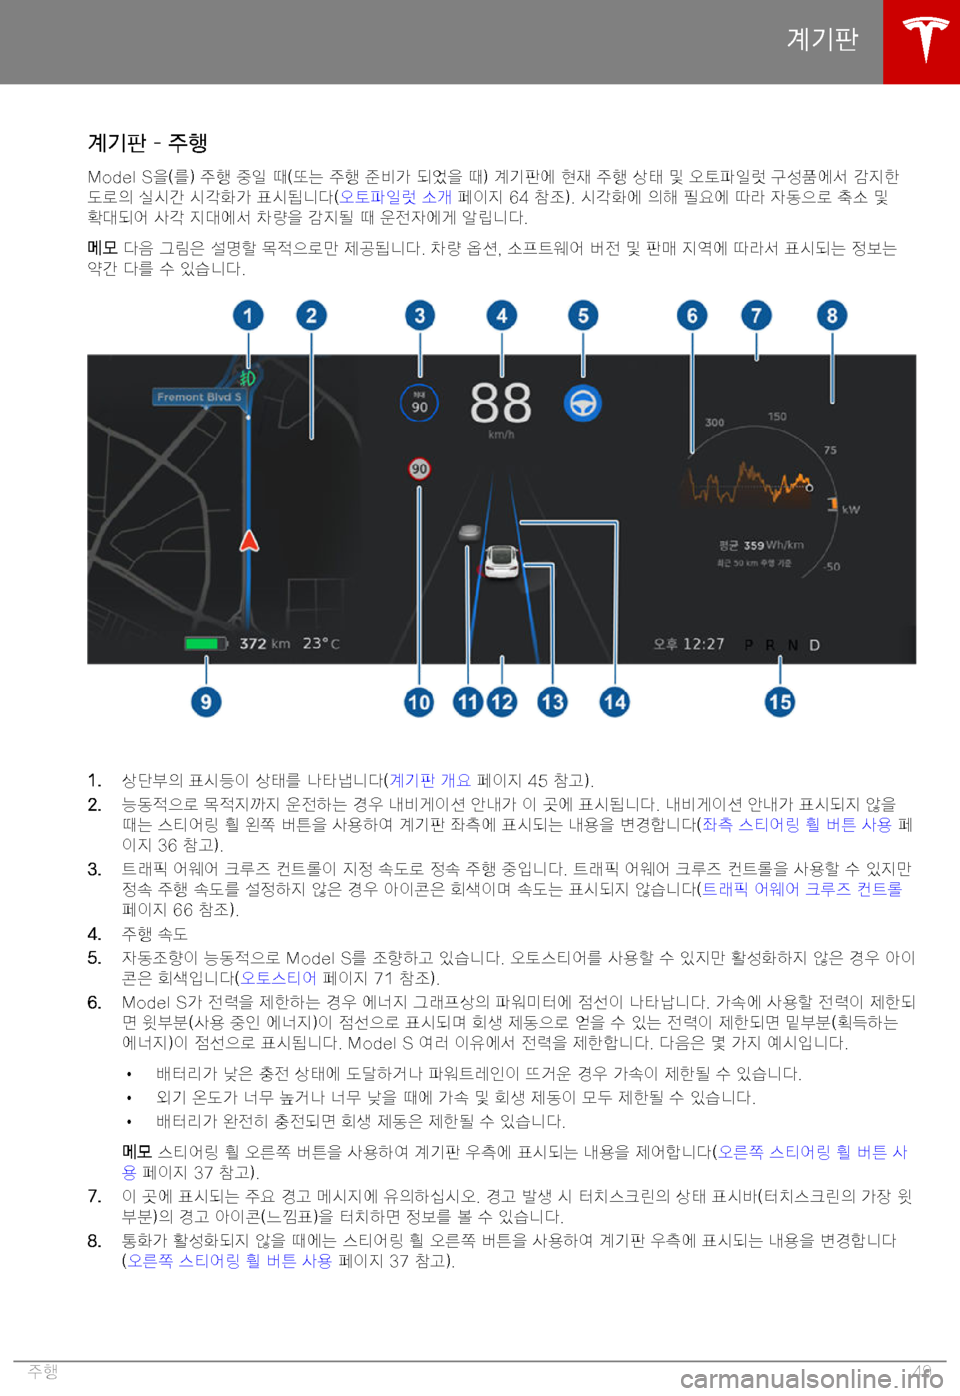 TESLA MODEL S 2019  사용자 가이드 (in Korean) "